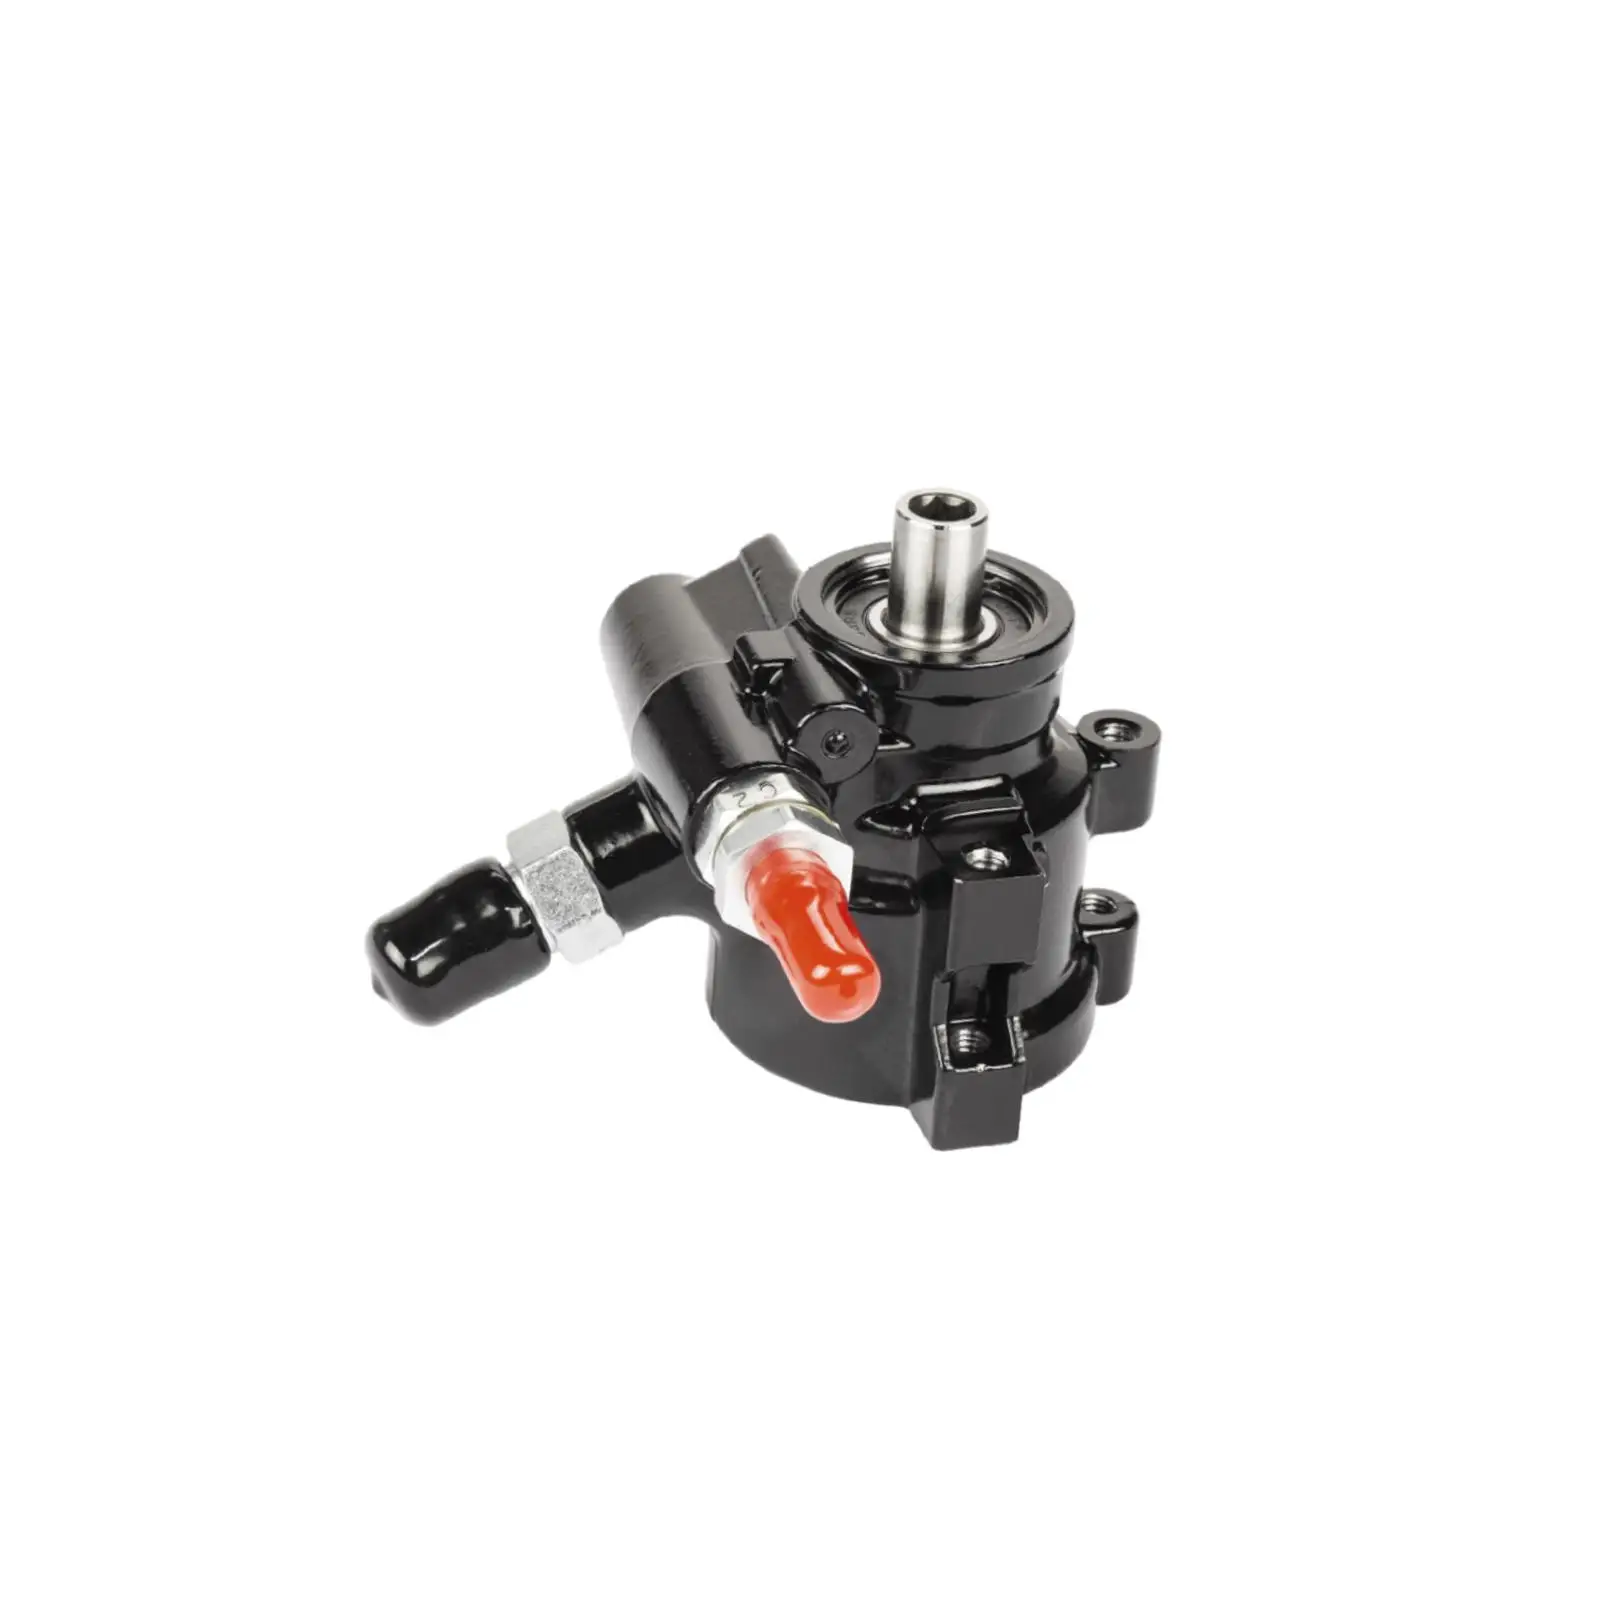 Power Steering Pump 172.1009 Car Accessories Replace for Saginaw TC Type 2 Convenient Installation Premium Sturdy Repair Part